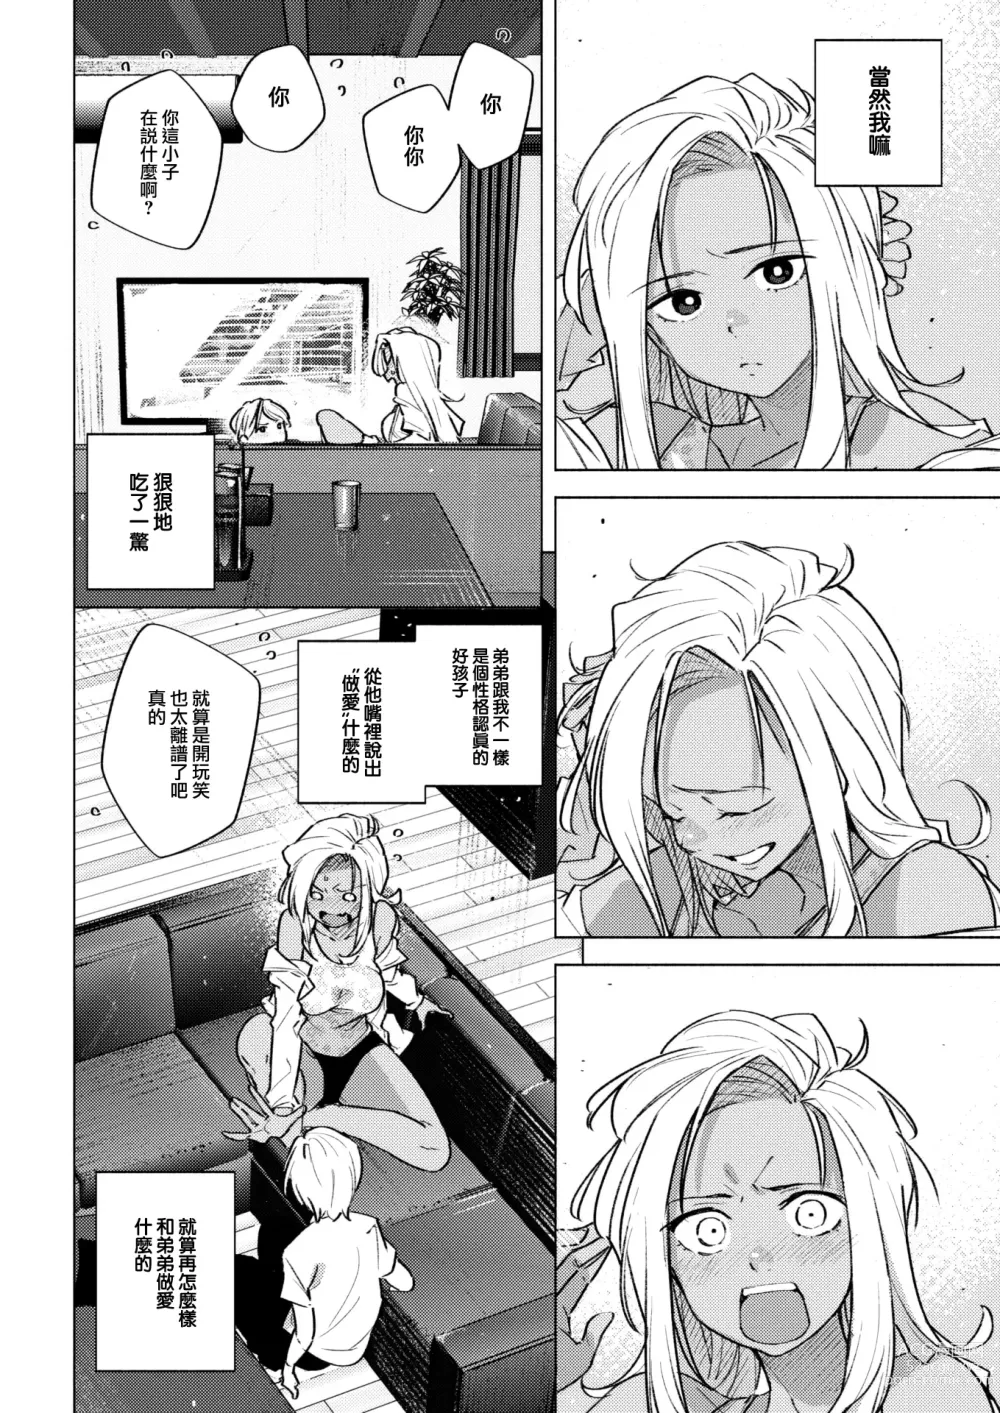 Page 3 of manga Ii Wake - reasons for orgasm